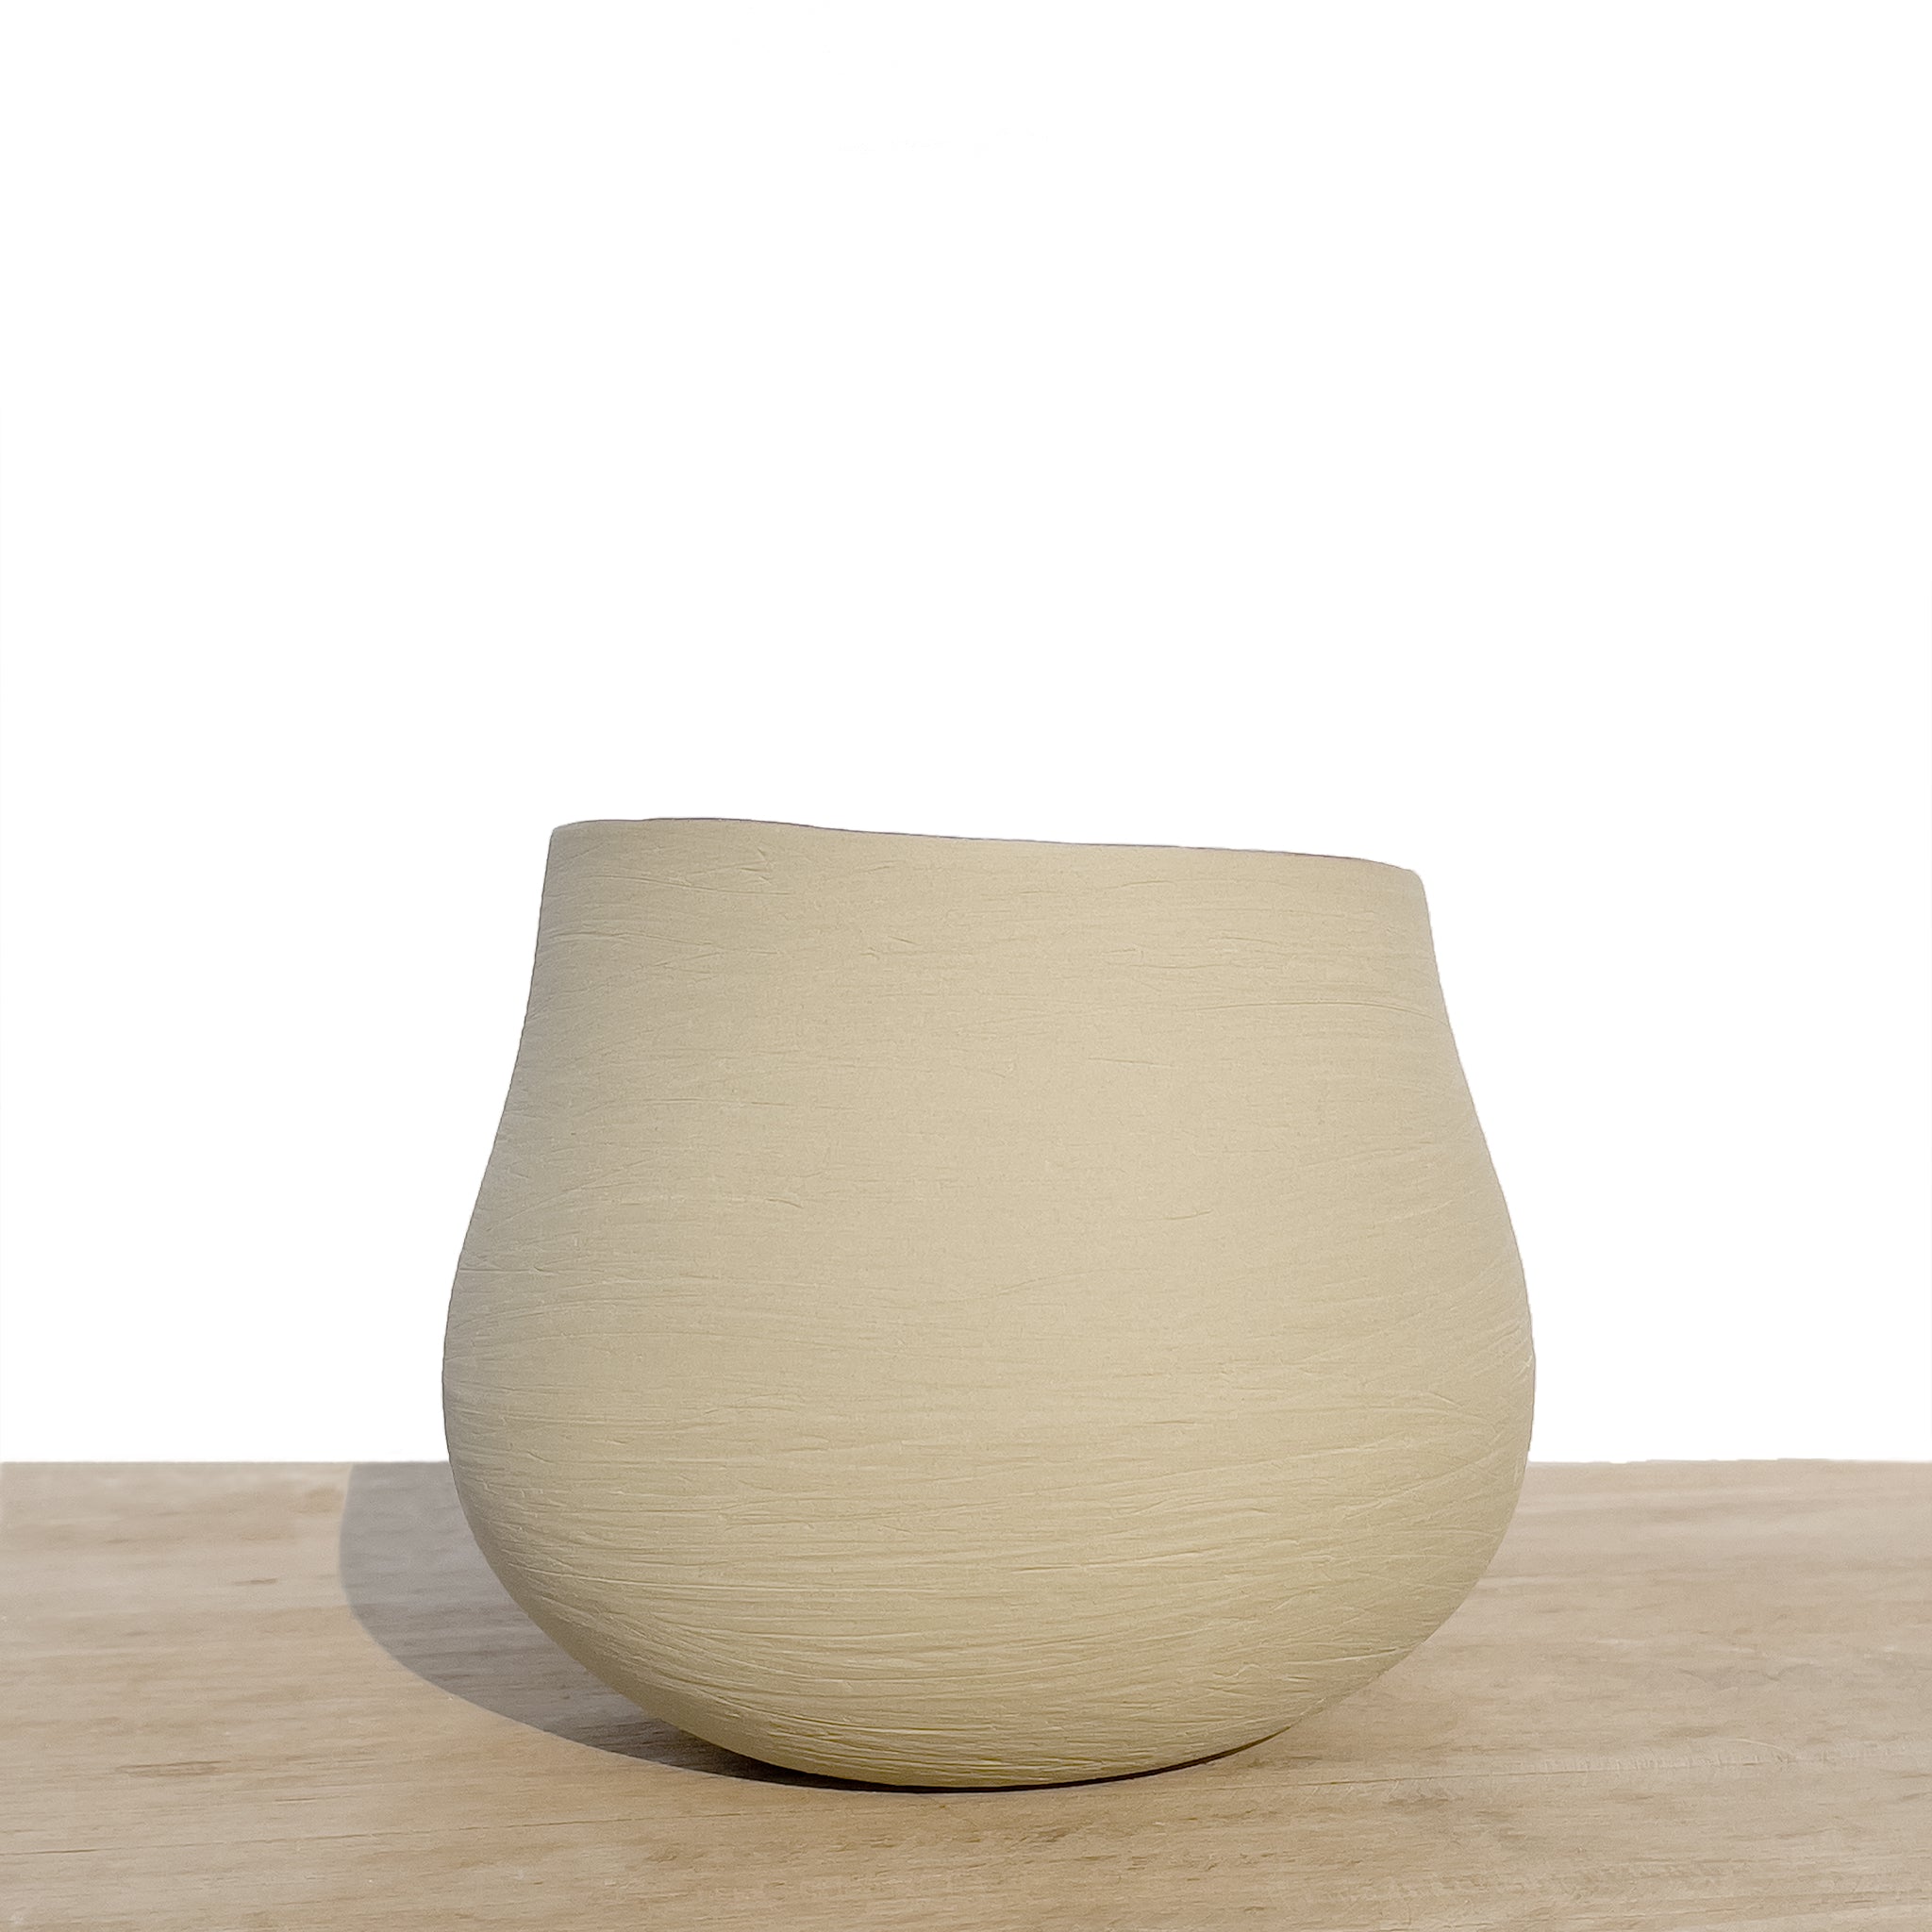 土灰色陶瓷盆 | Clay pottery planter